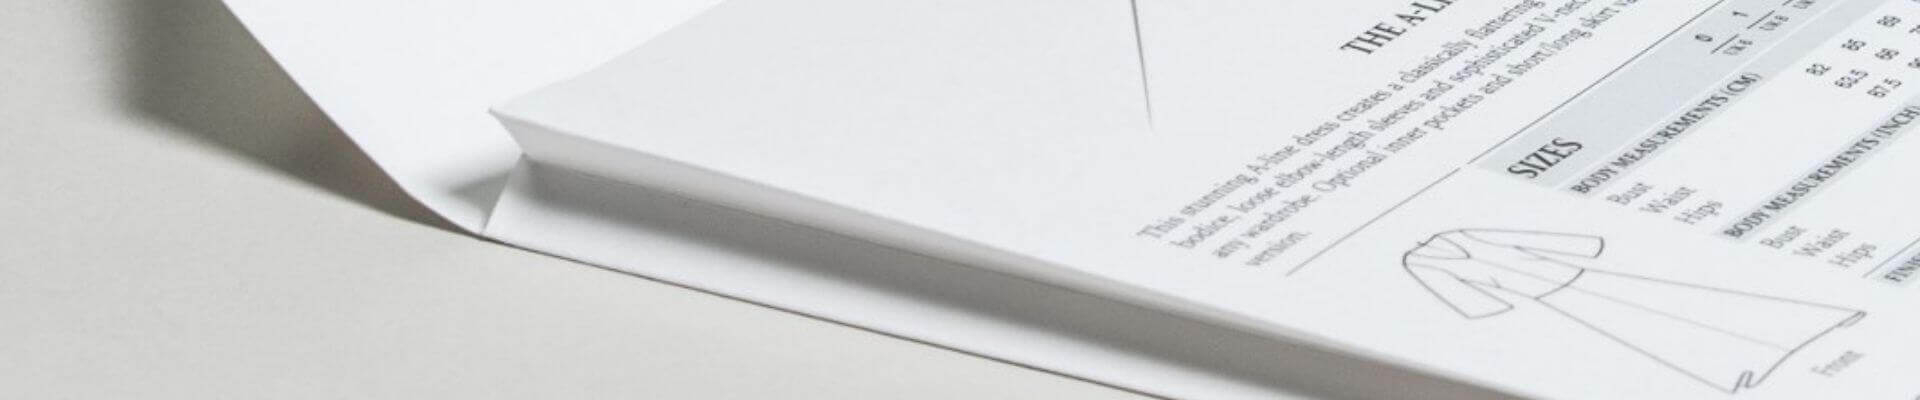 Personalisation - Bespoke - Envelopes - Gusset Envelopes